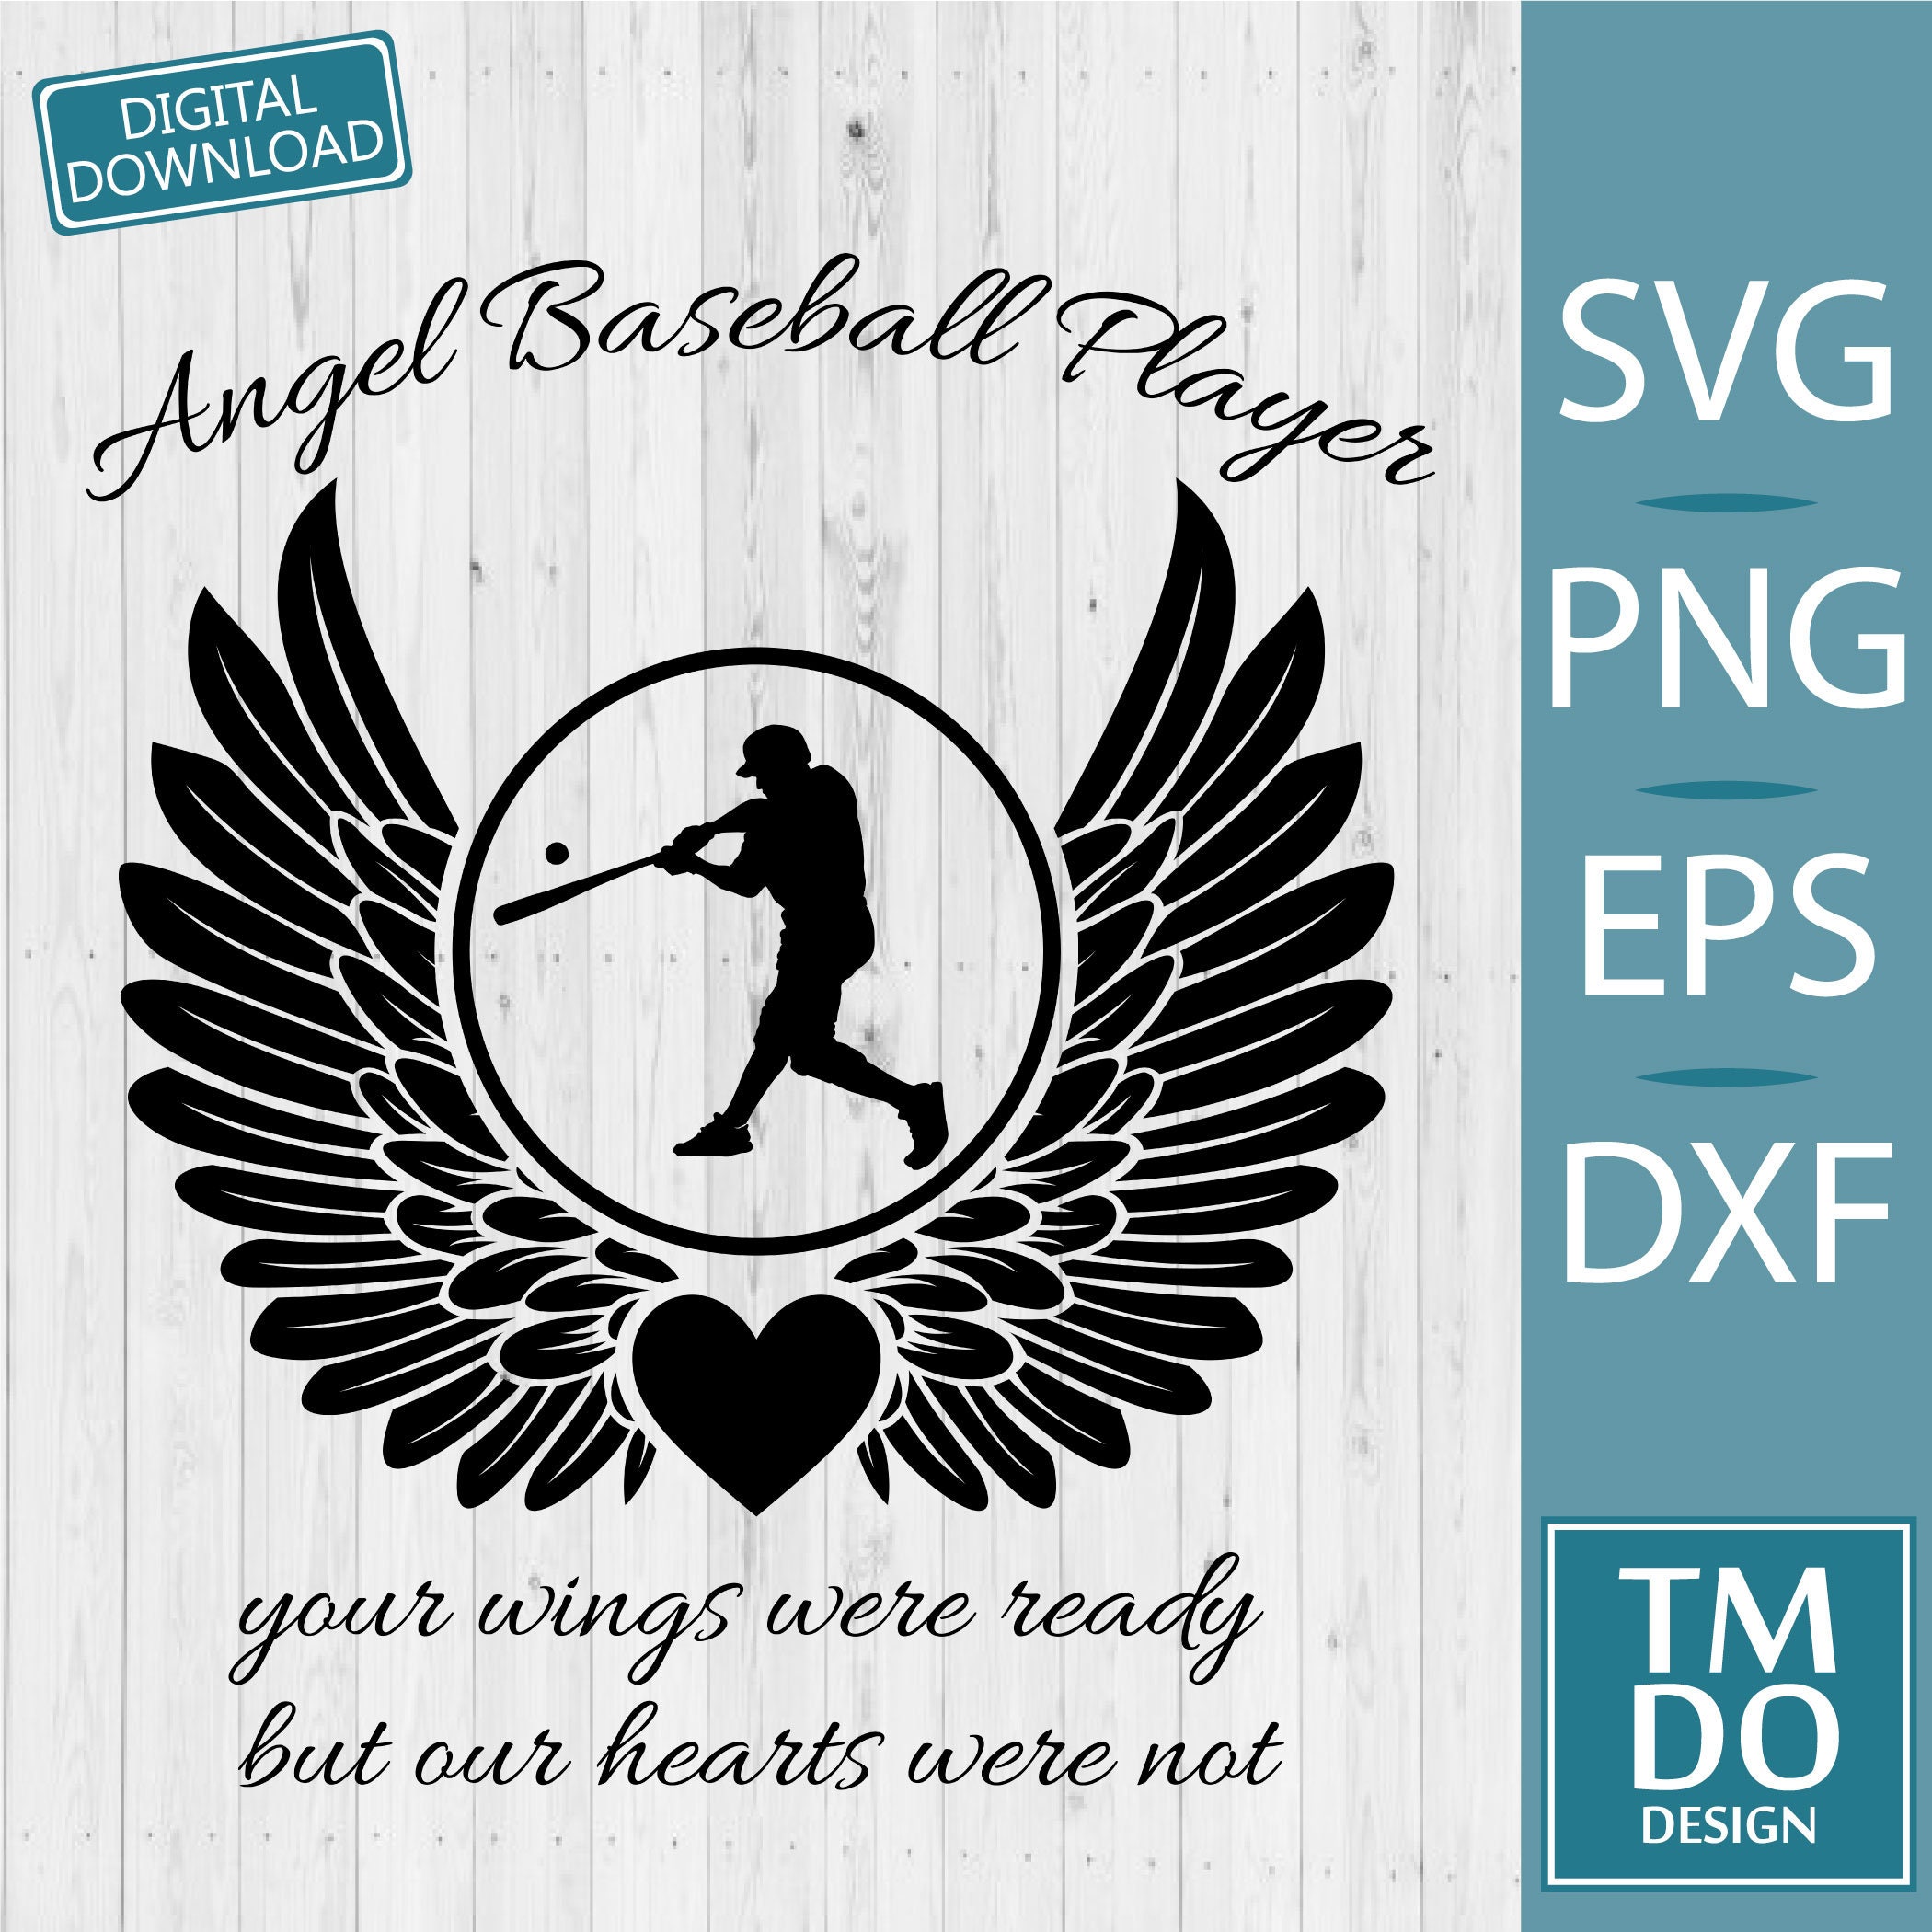 Anaheim Angels Logo PNG Transparent & SVG Vector - Freebie Supply